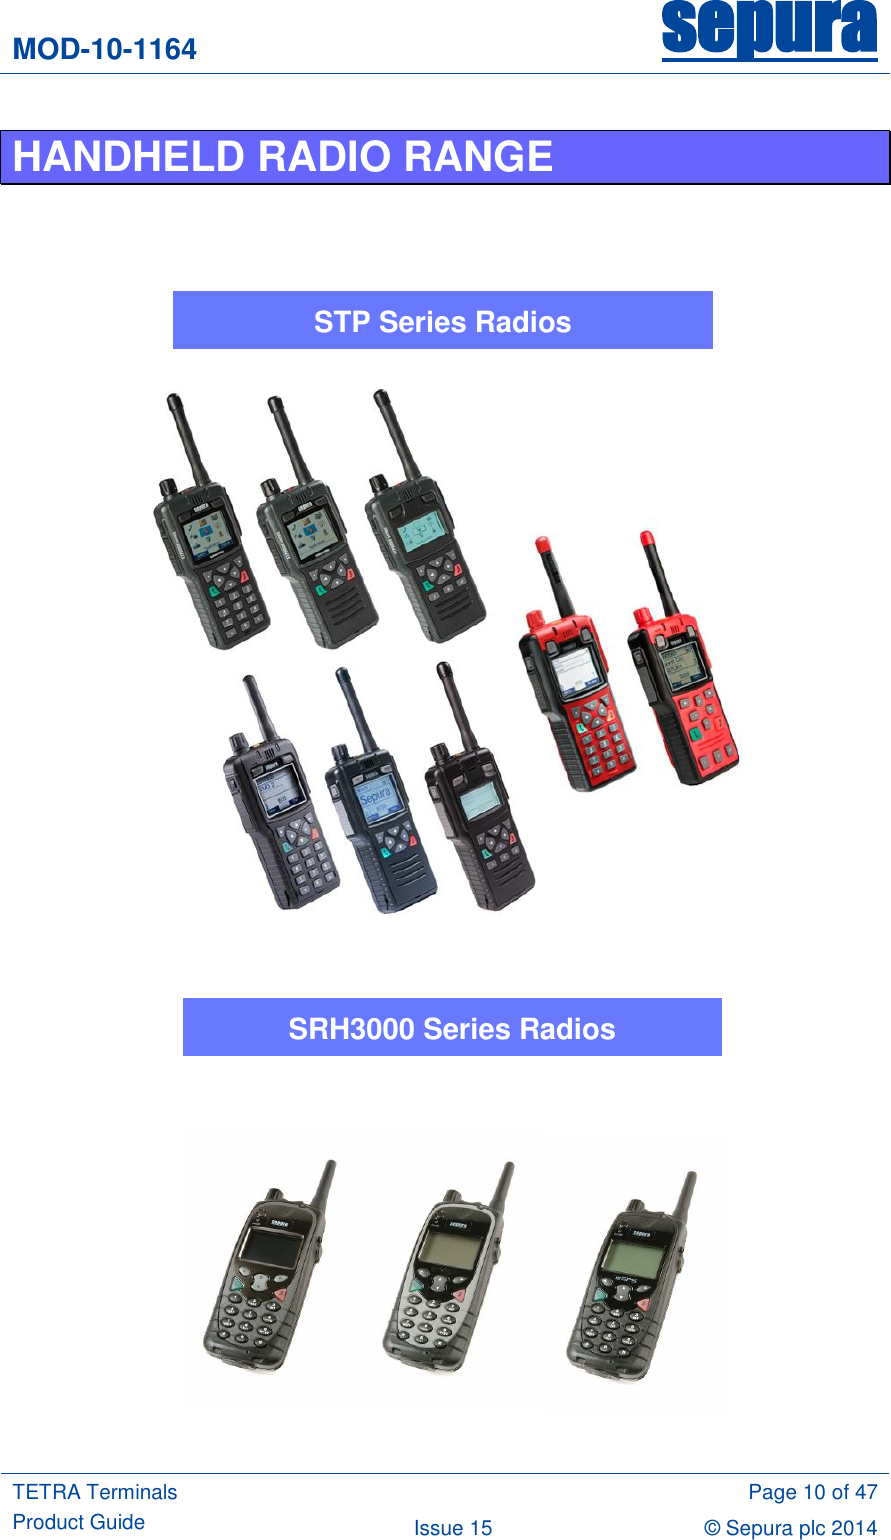 MOD-10-1164 sepura  TETRA Terminals Product Guide  Page 10 of 47 Issue 15 © Sepura plc 2014   HANDHELD RADIO RANGE              STP Series Radios SRH3000 Series Radios 